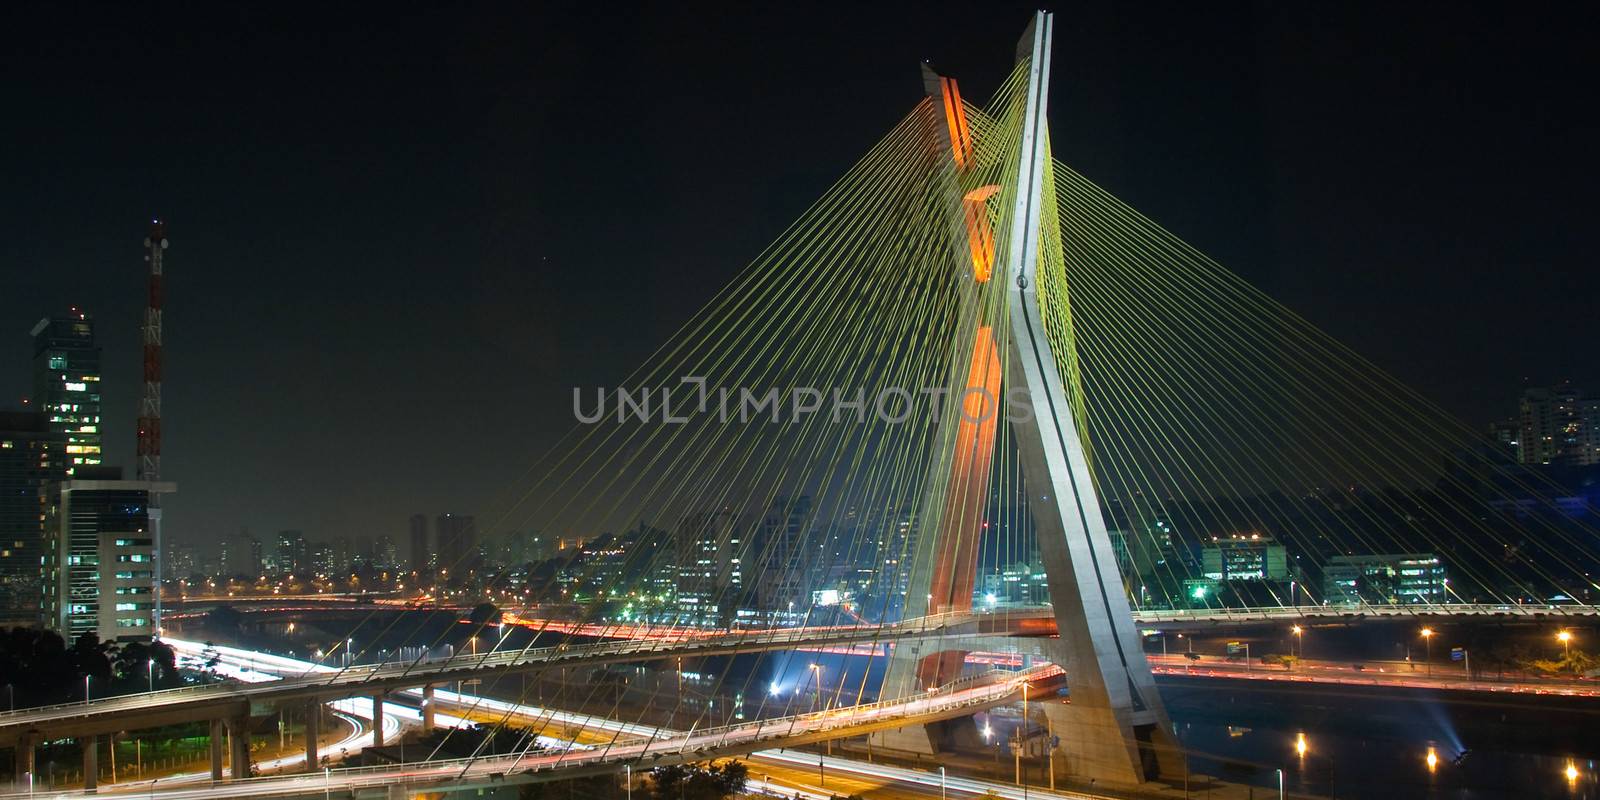 Beautiful bridge lit up at night in Sao Paulo, Brazil